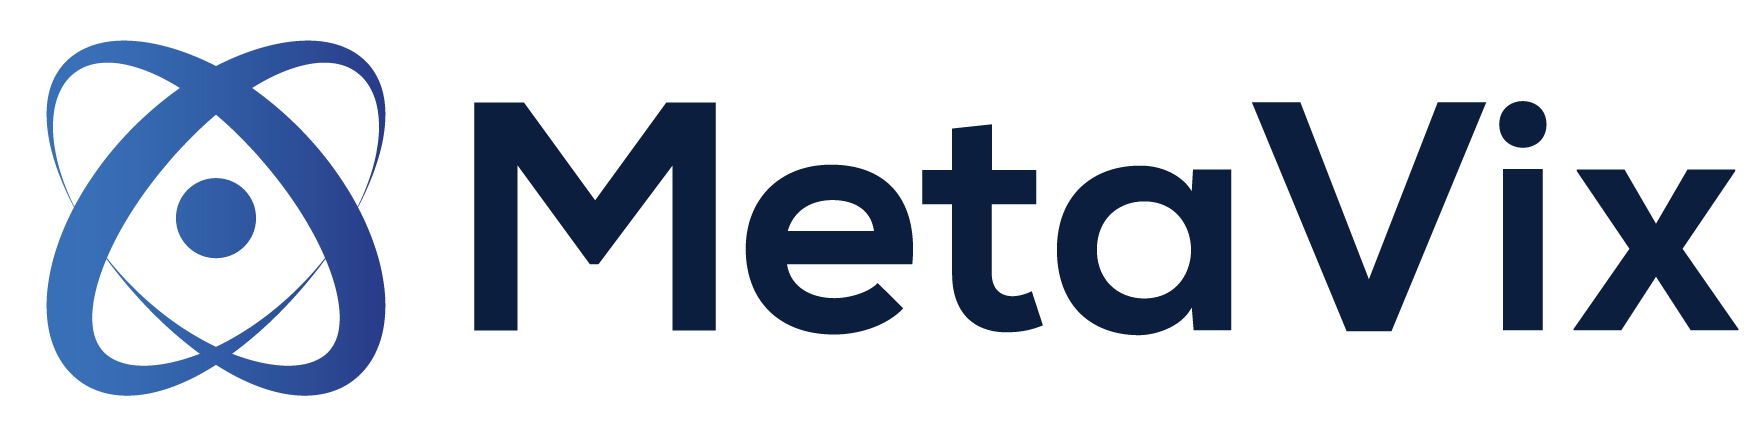 MetaVix Technologies